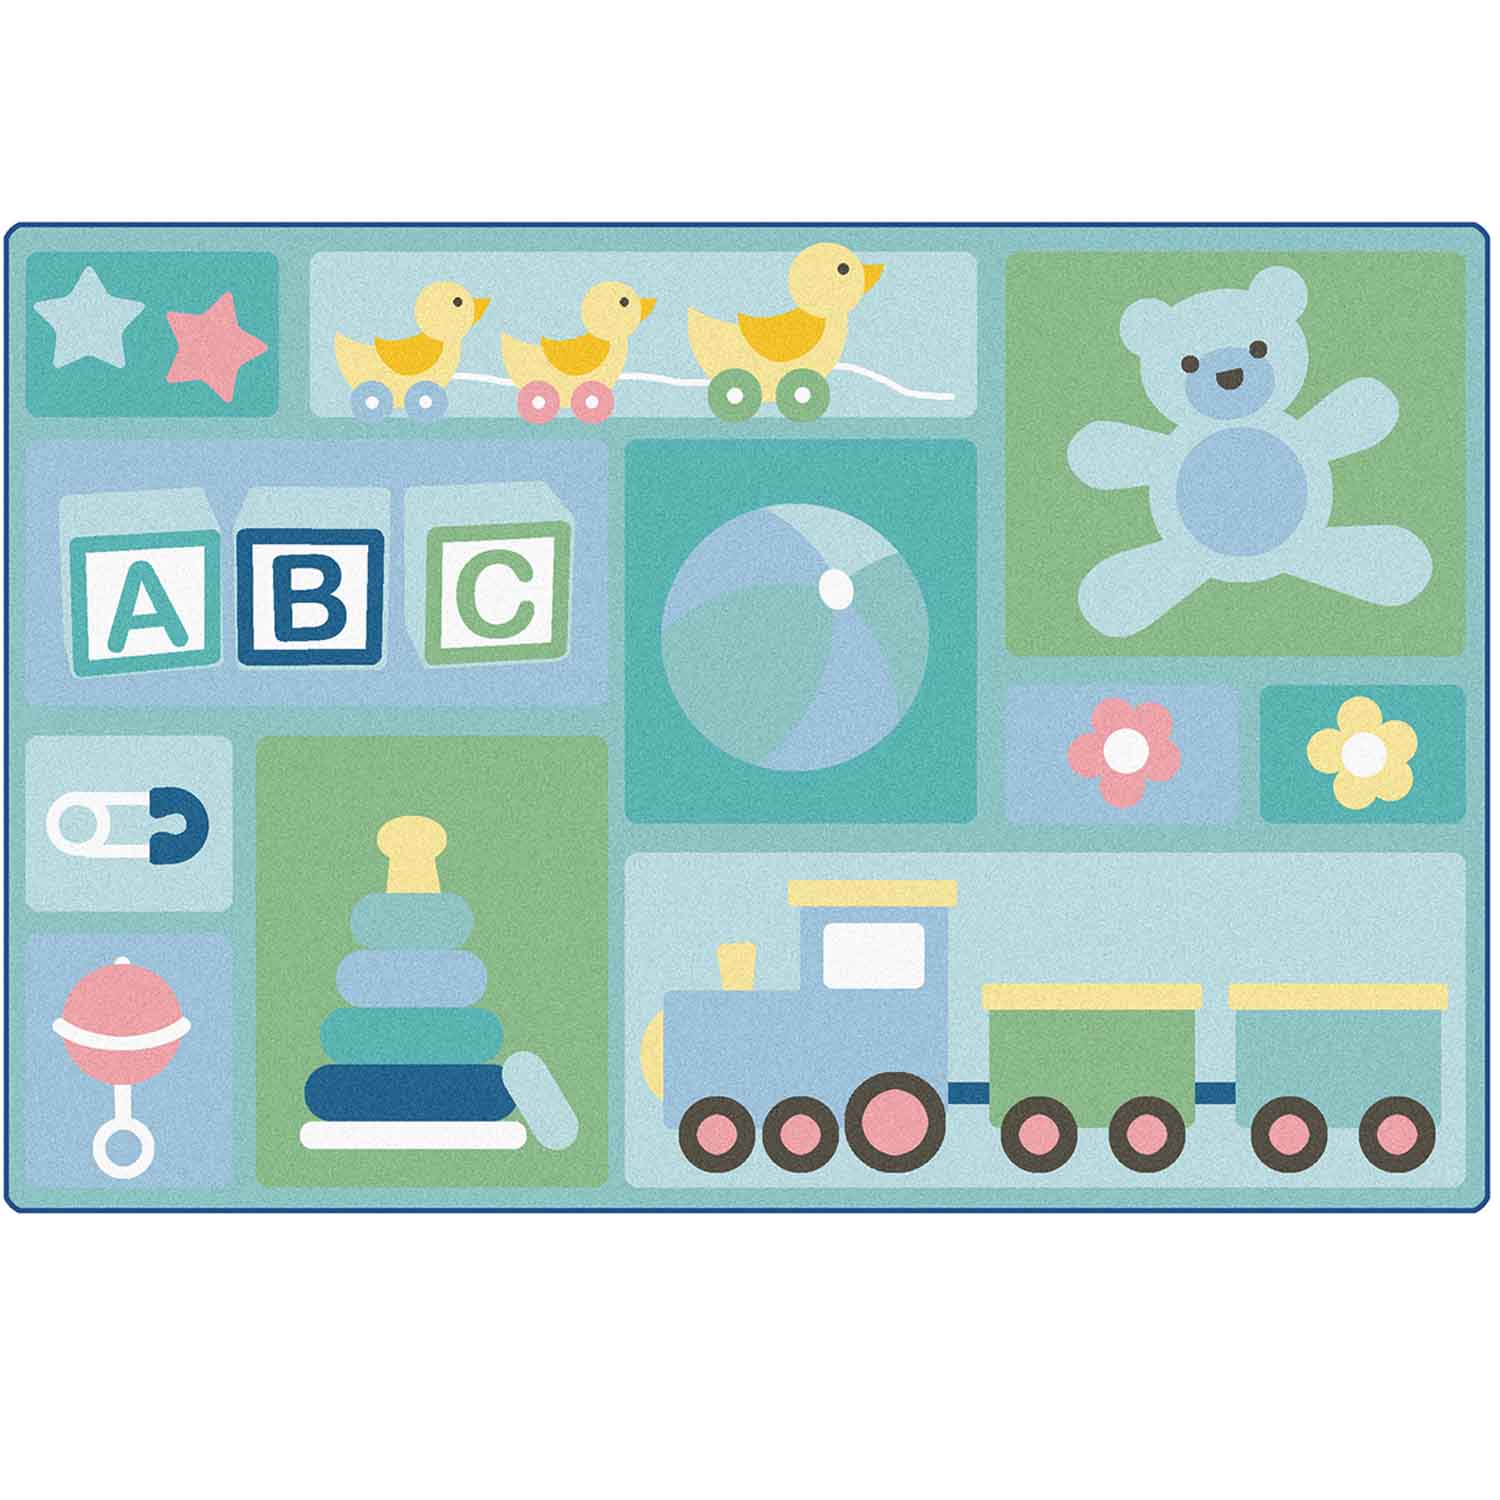 KIDSoft™ Baby's Basics Toddler Rug, Rectangle 4' x 6'